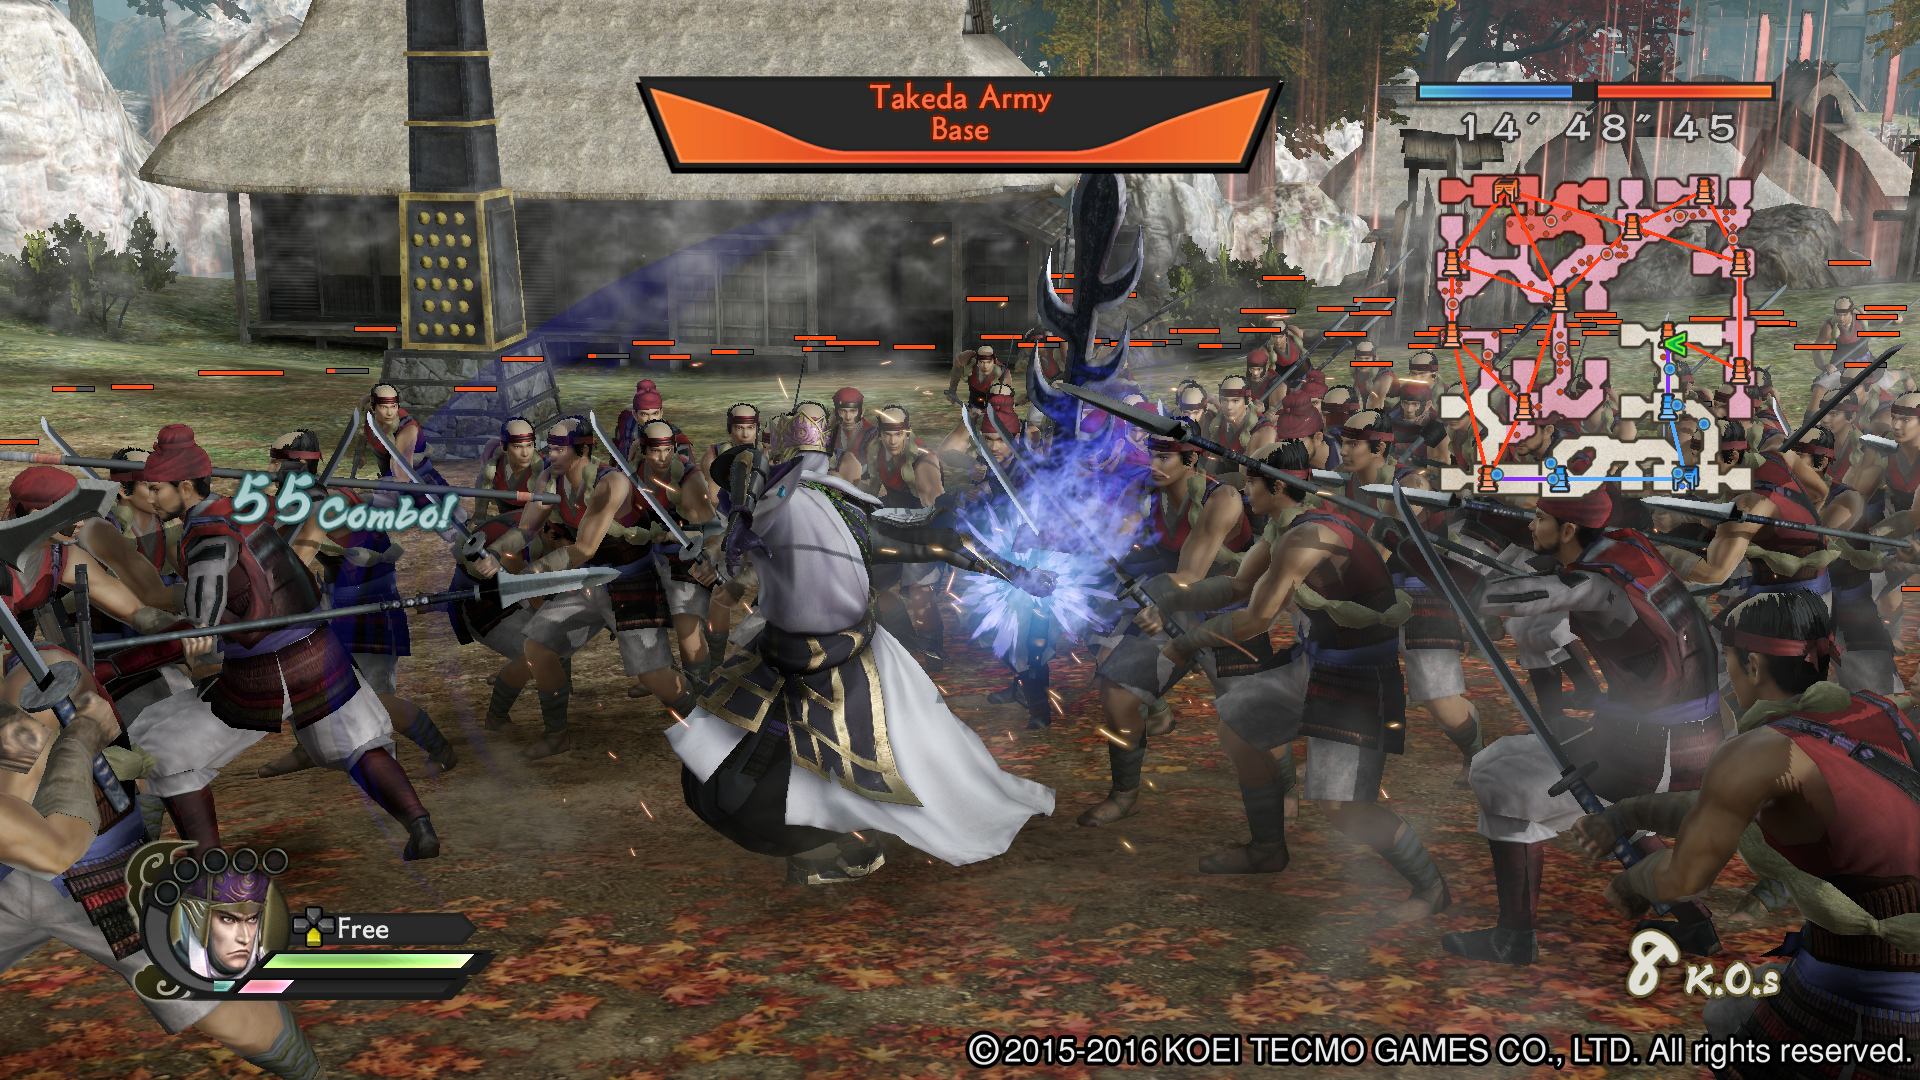 ÎÏÎ¿ÏÎ­Î»ÎµÏÎ¼Î± ÎµÎ¹ÎºÏÎ½Î±Ï Î³Î¹Î± Samurai Warriors 4 Empires PS4 USED